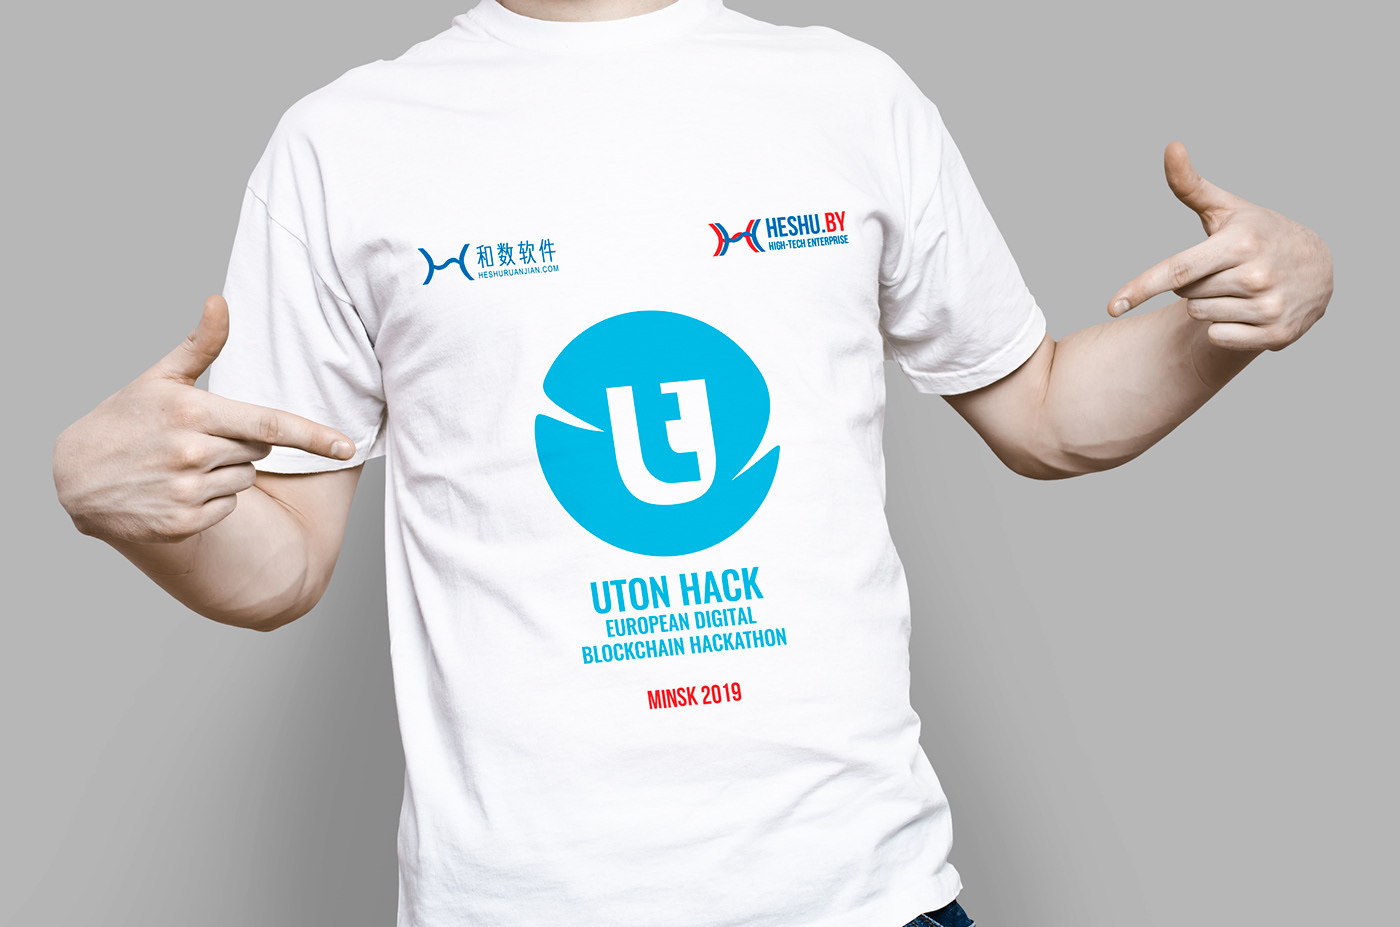 hackaton blockchain digital free design Uton imaguru Competition IT programming 